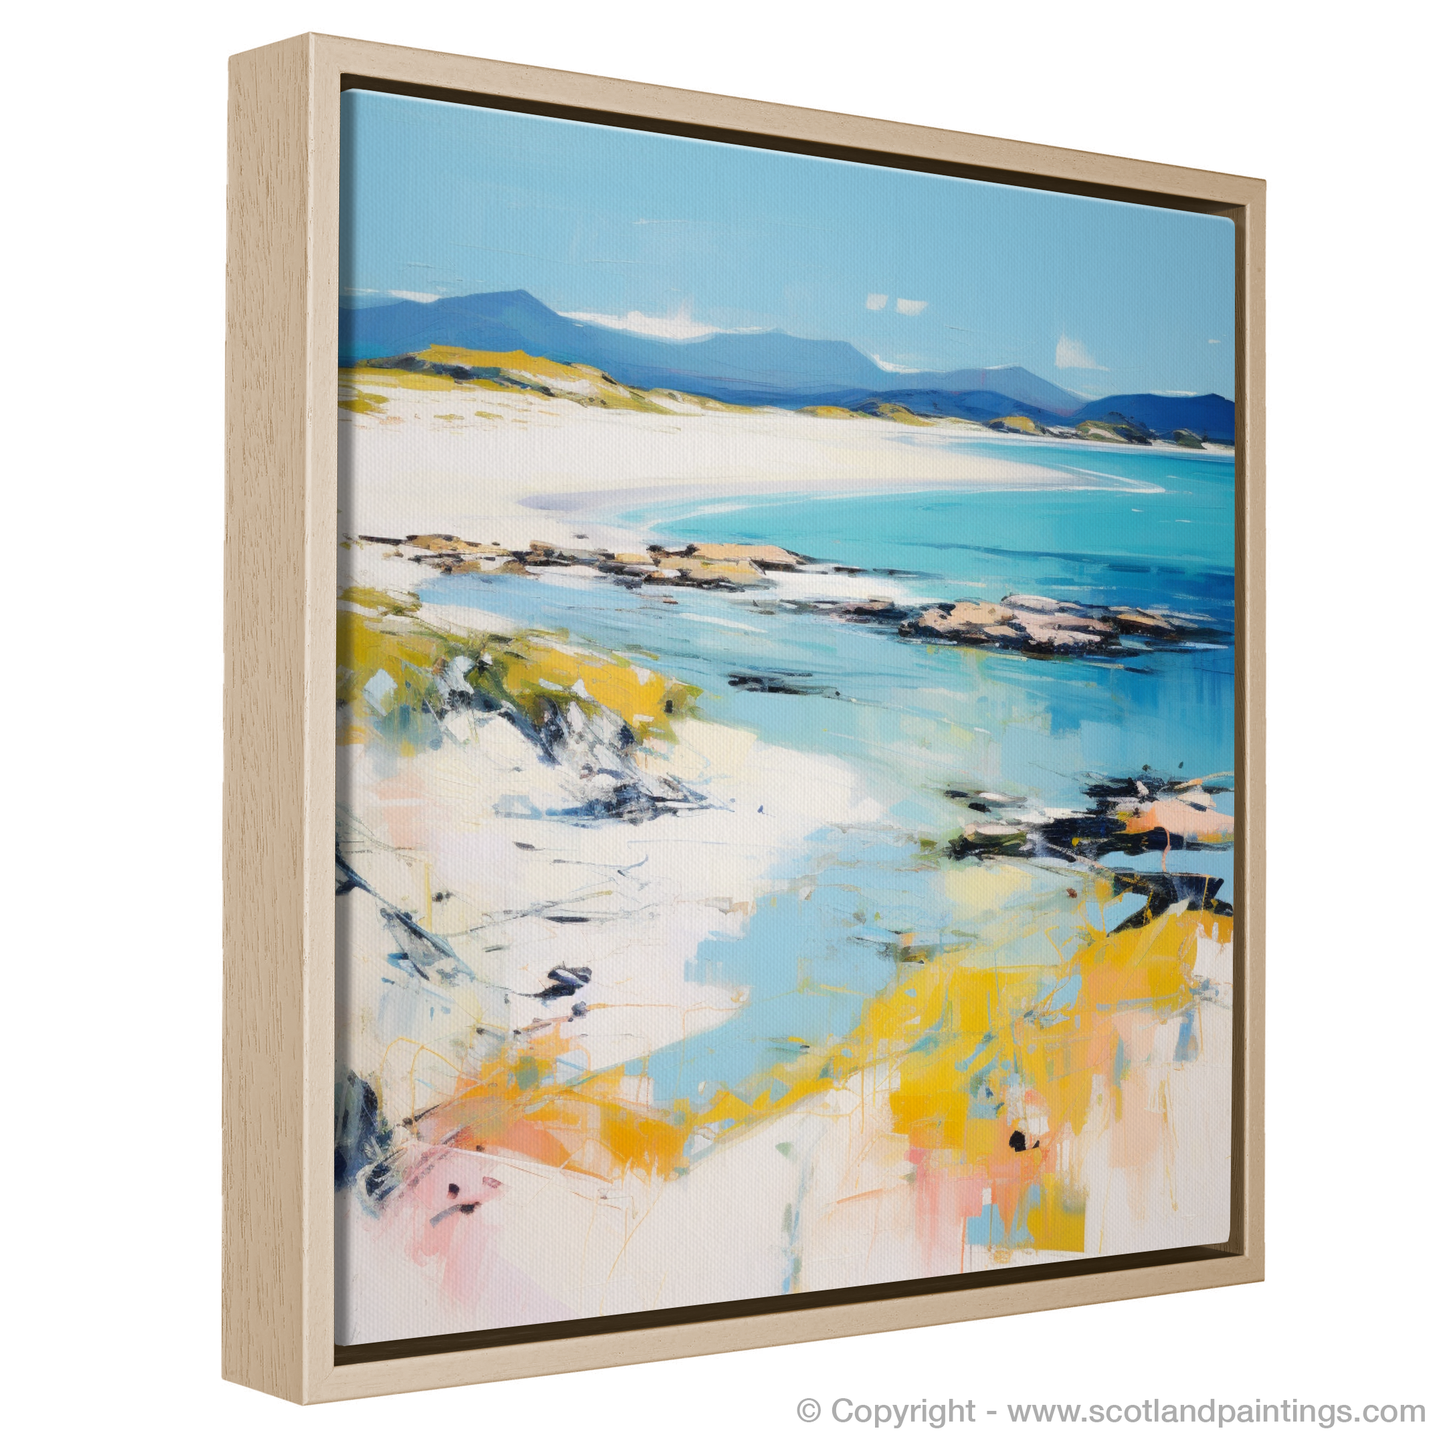 Painting and Art Print of Camusdarach Beach, Arisaig entitled "Abstract Impression of Camusdarach Beach".